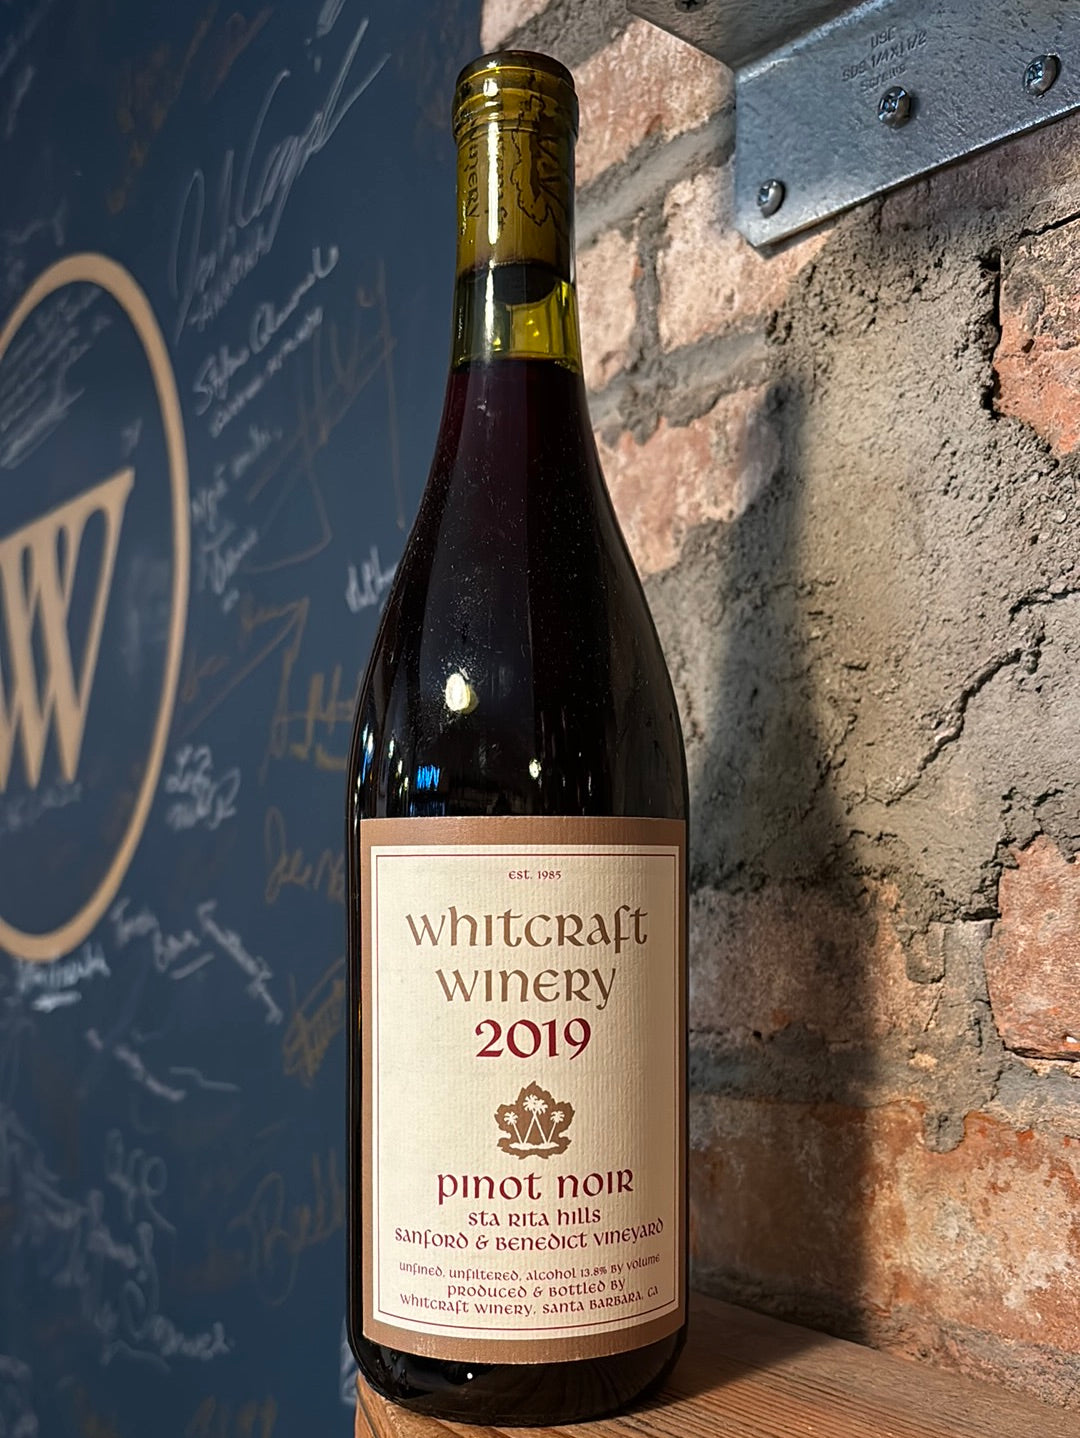 Whitcraft Winery Sanford & Benedict Vineyard Pinot Noir Santa Rita Hills 2019